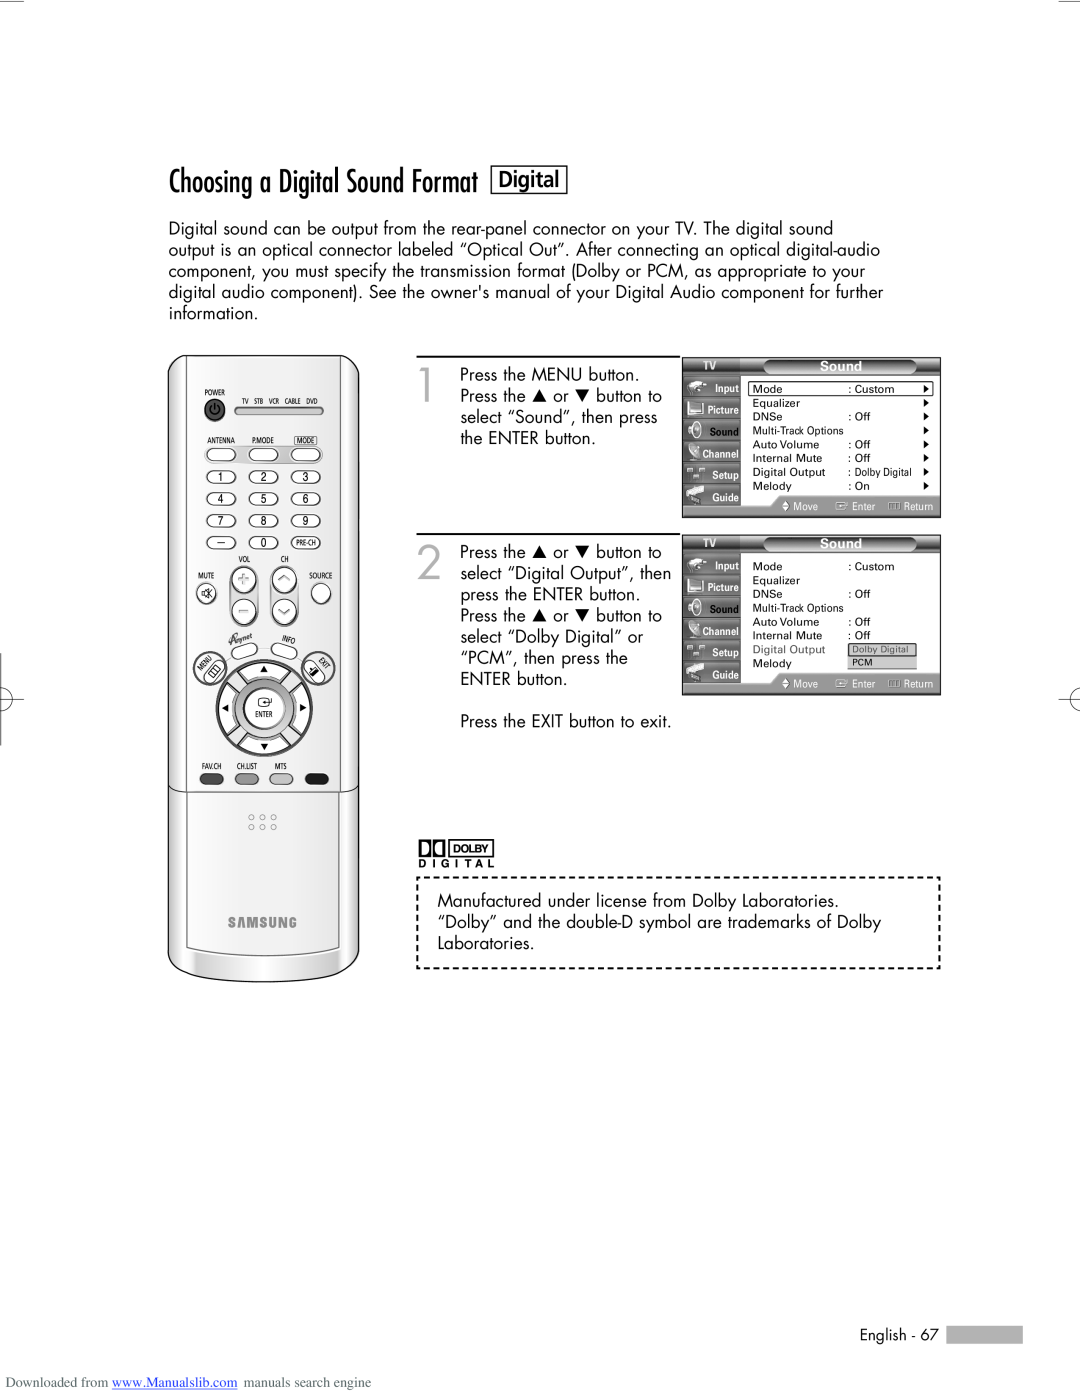 Samsung HL-R5656W, HL-R6156W, HL-R5056W manual Choosing a Digital Sound Format, Digital Output 